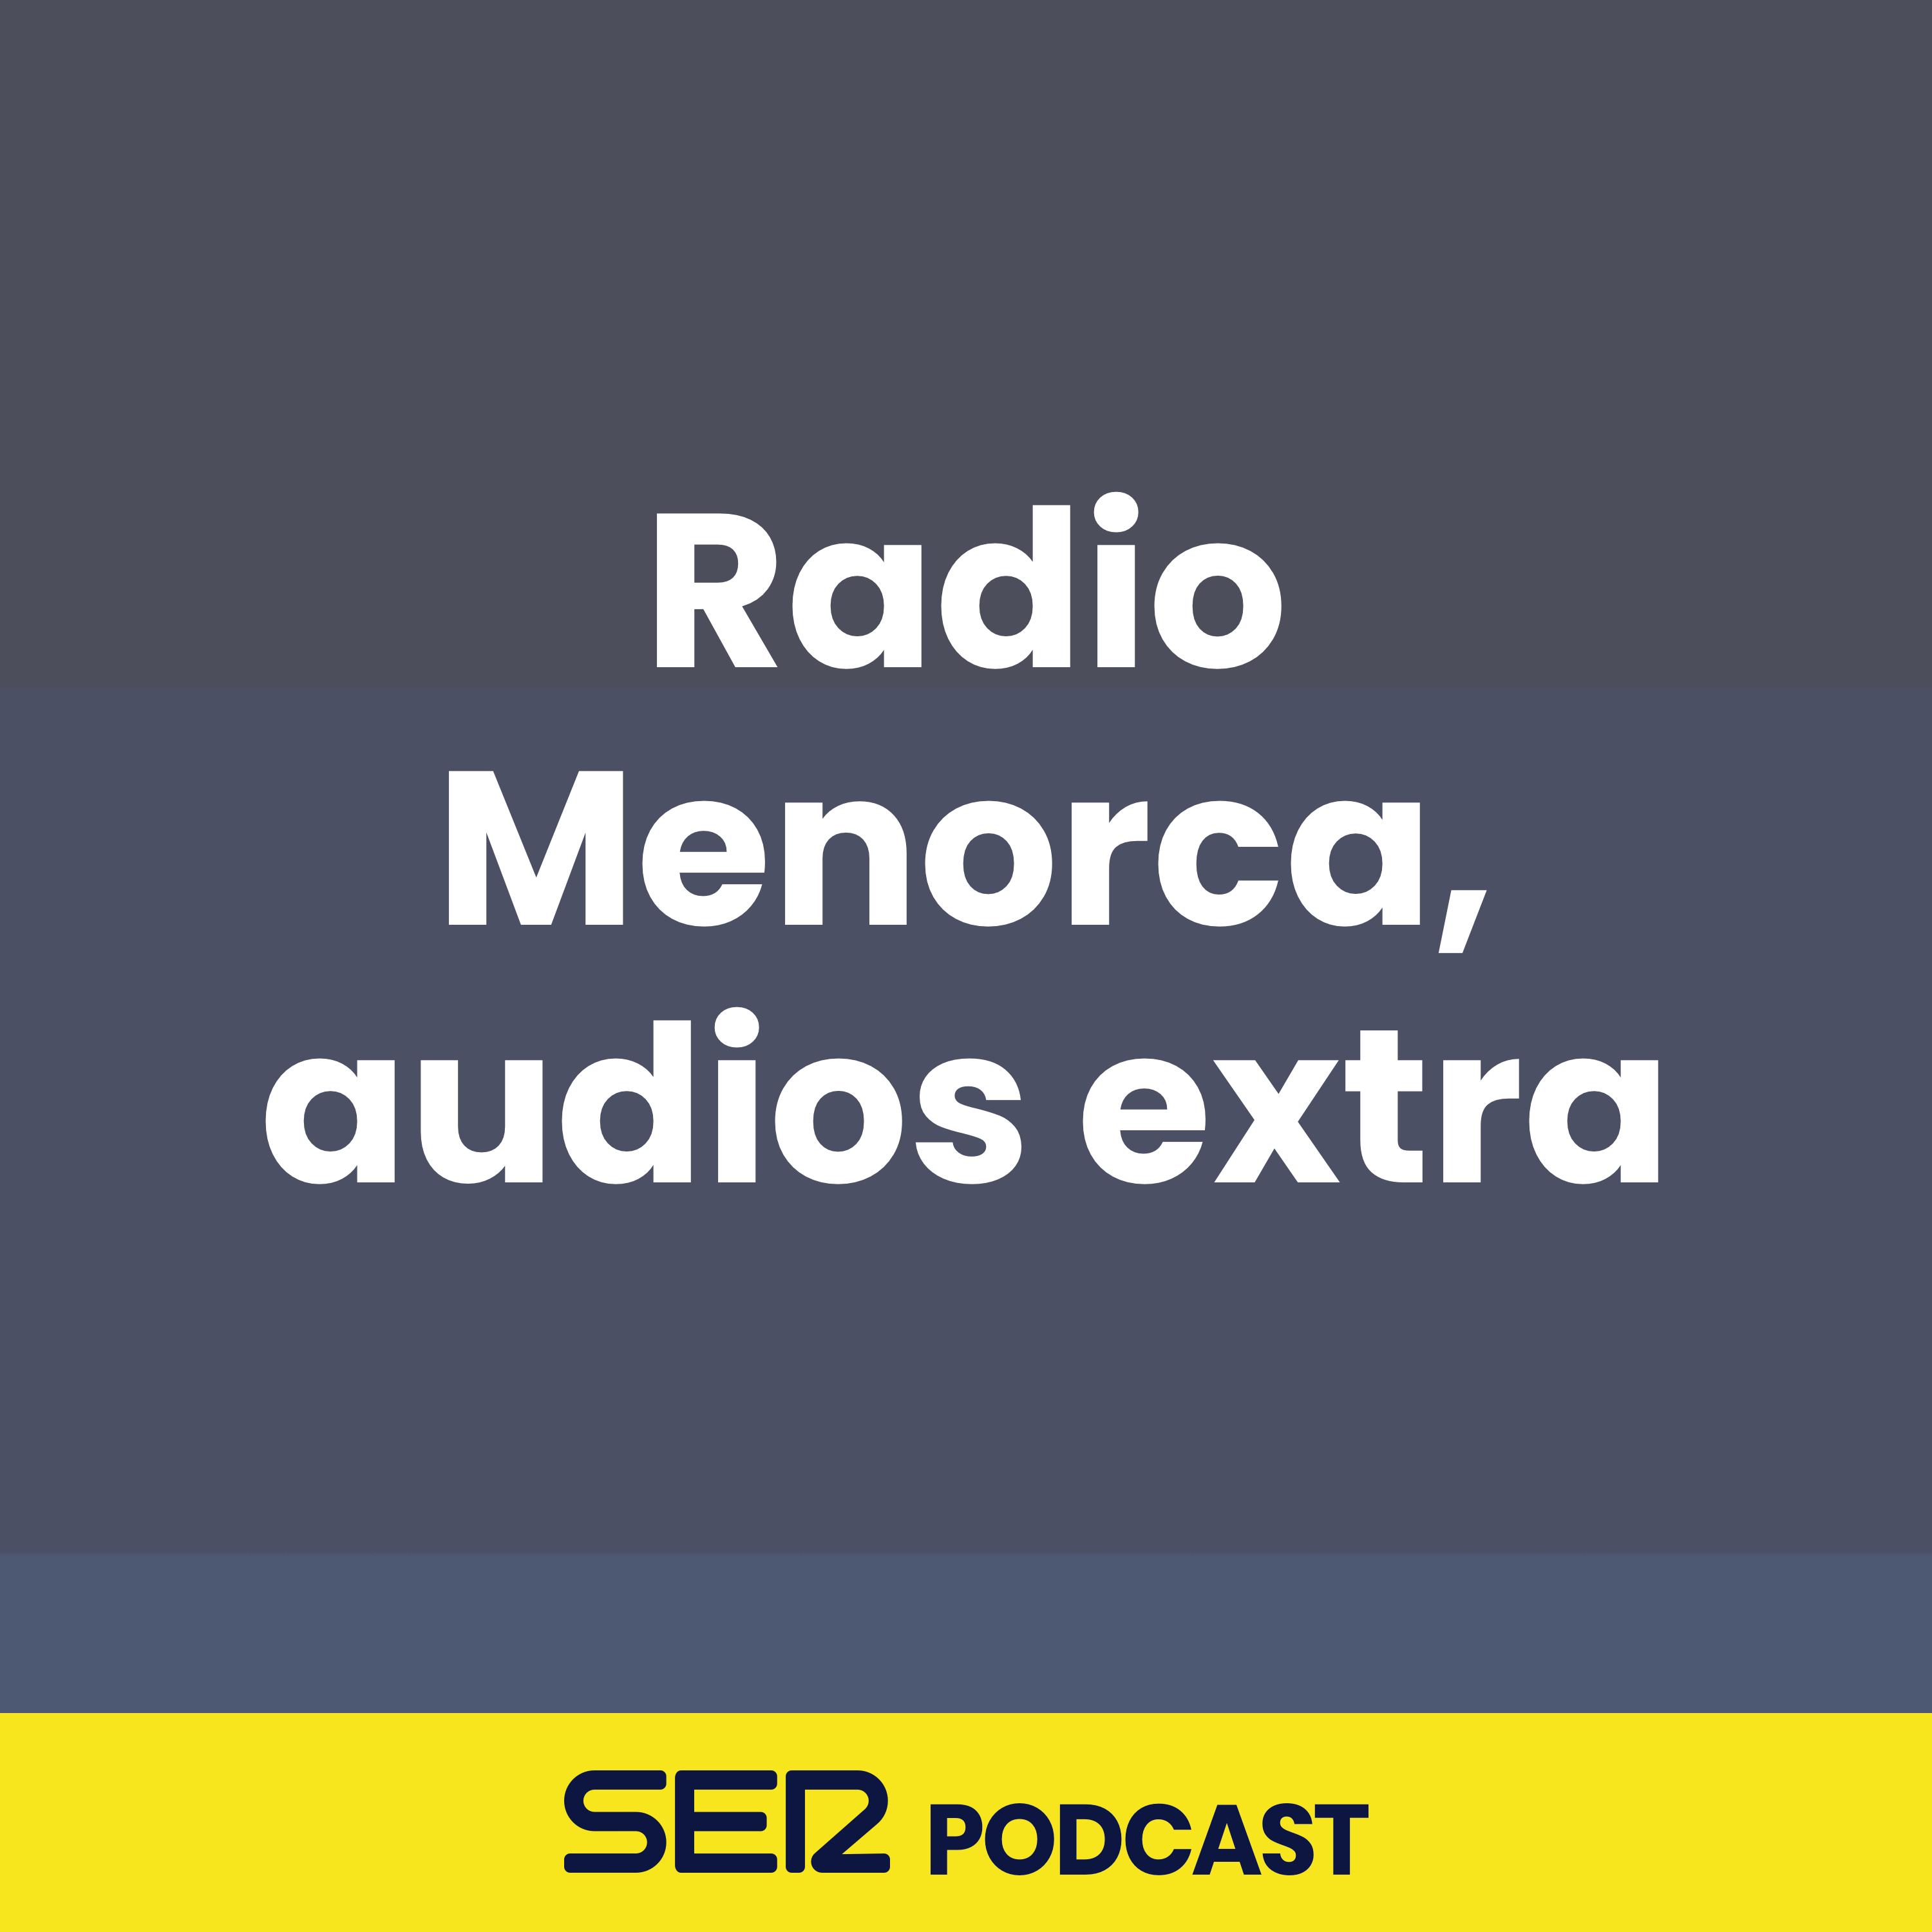 Radio Menorca, audios extra